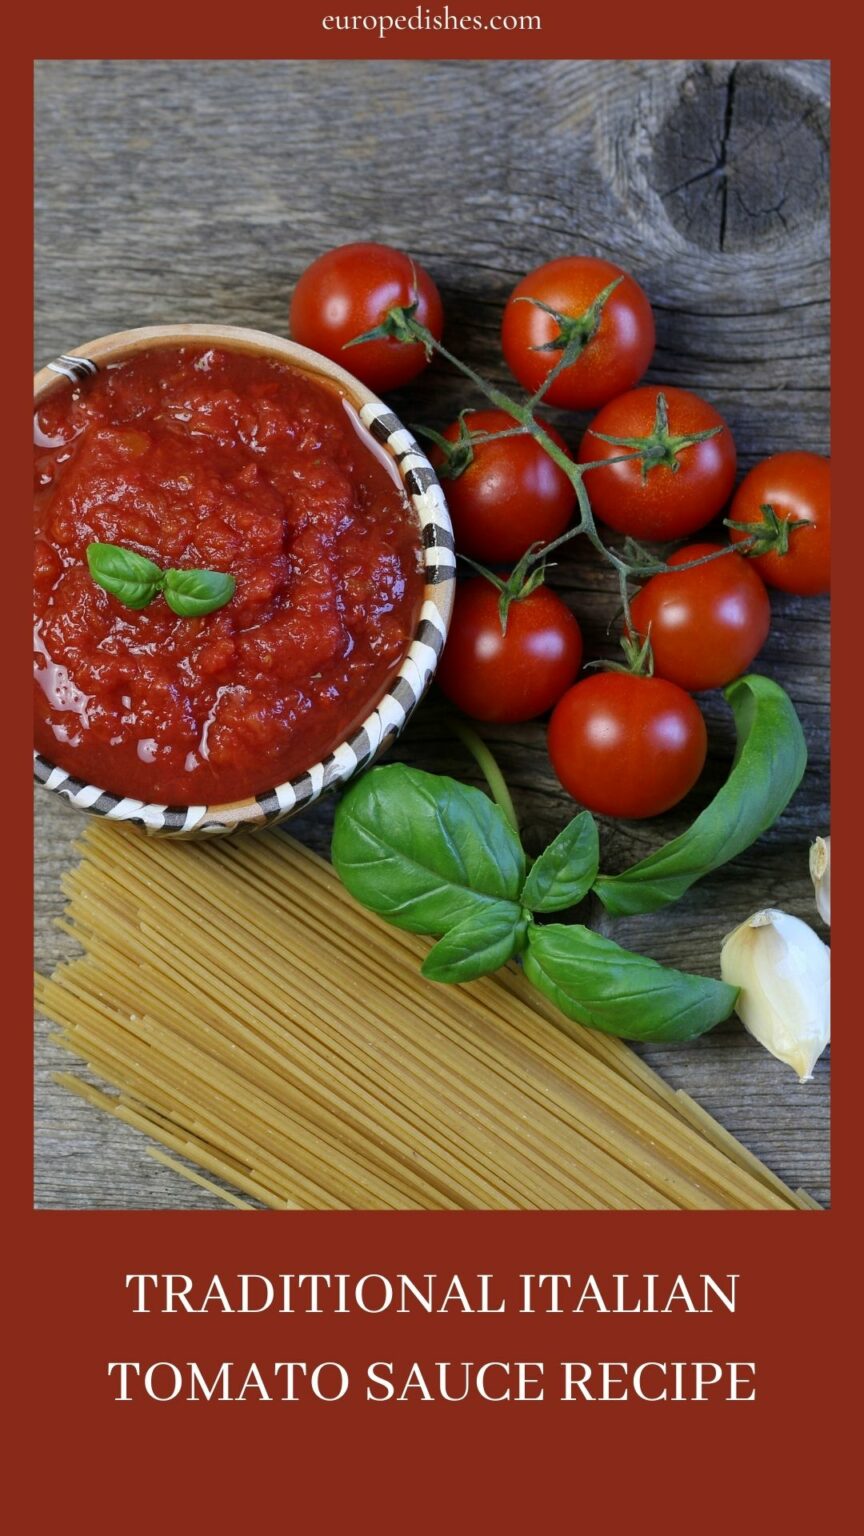 RECIPE Italian Tomato Sauce from Fresh Tomatoes | ED